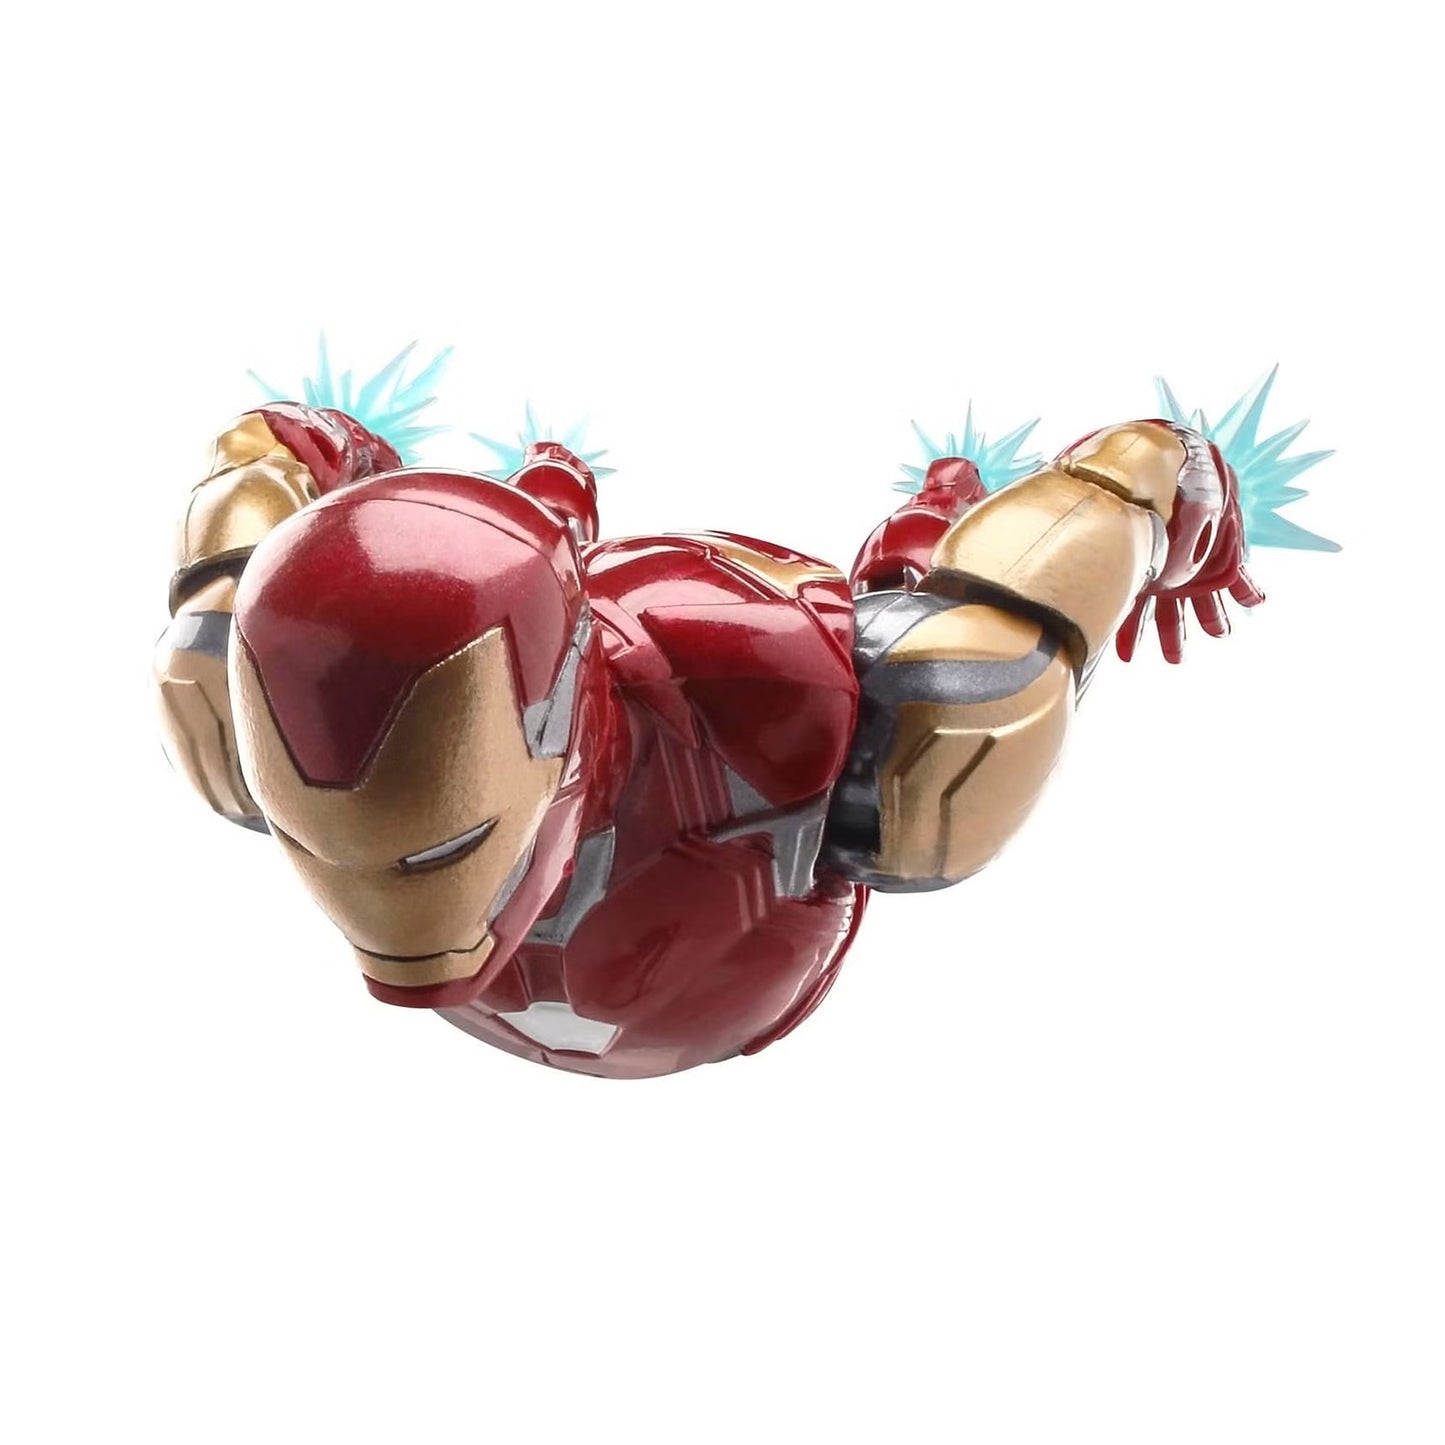 Marvel Legends Iron Man Mark 85 (Marvel Studios)